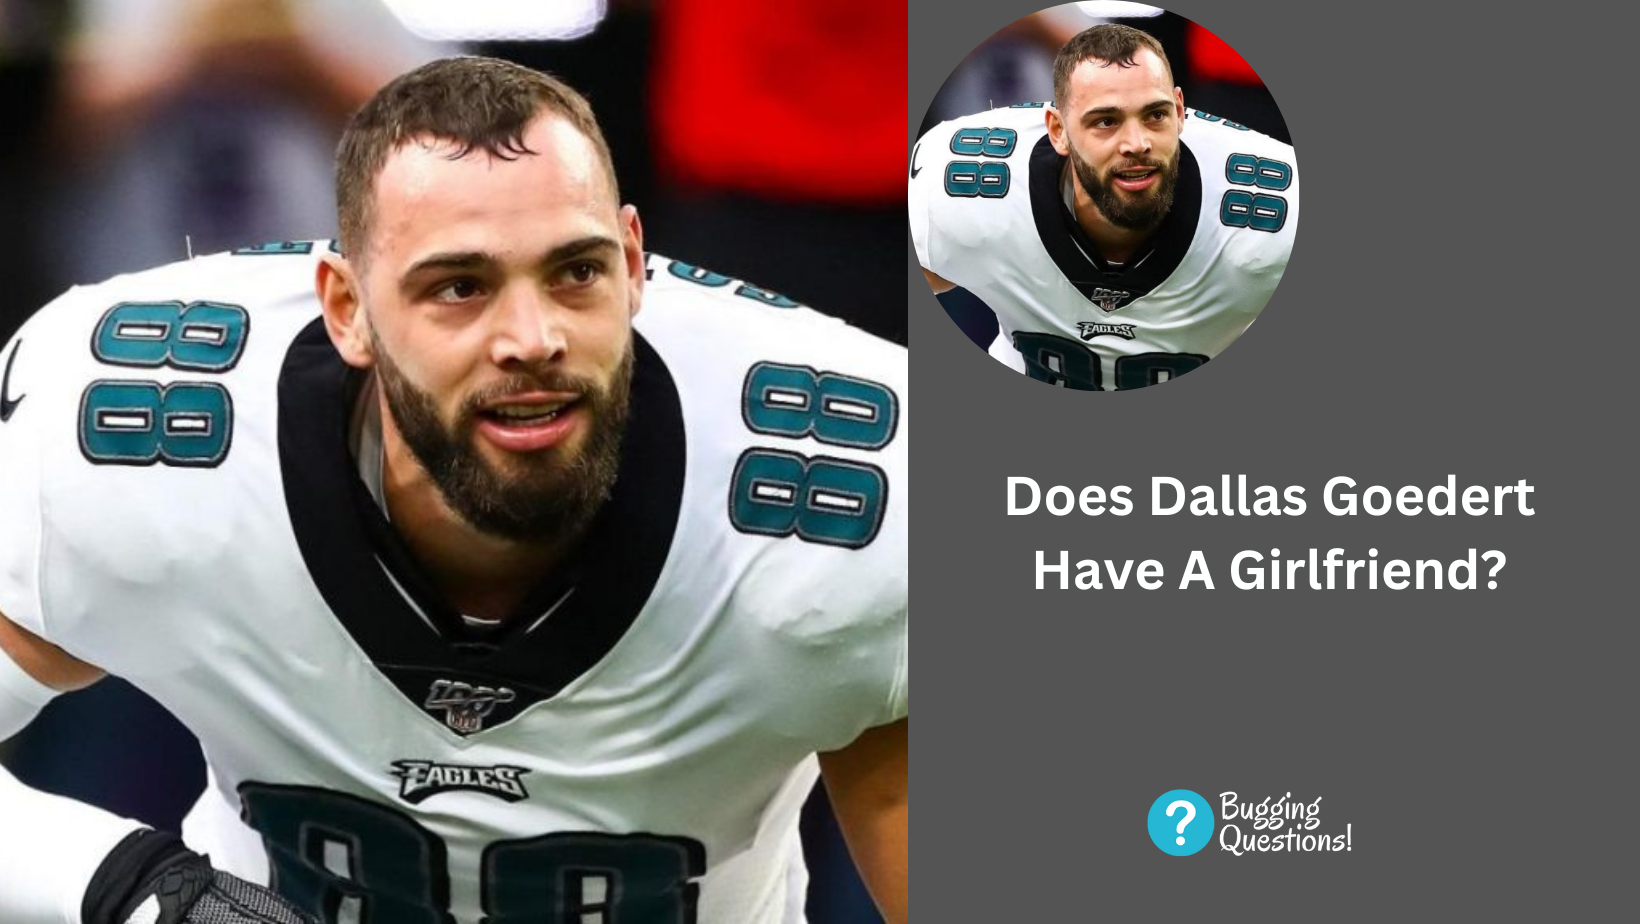 Does Dallas Goedert Have A Girlfriend?